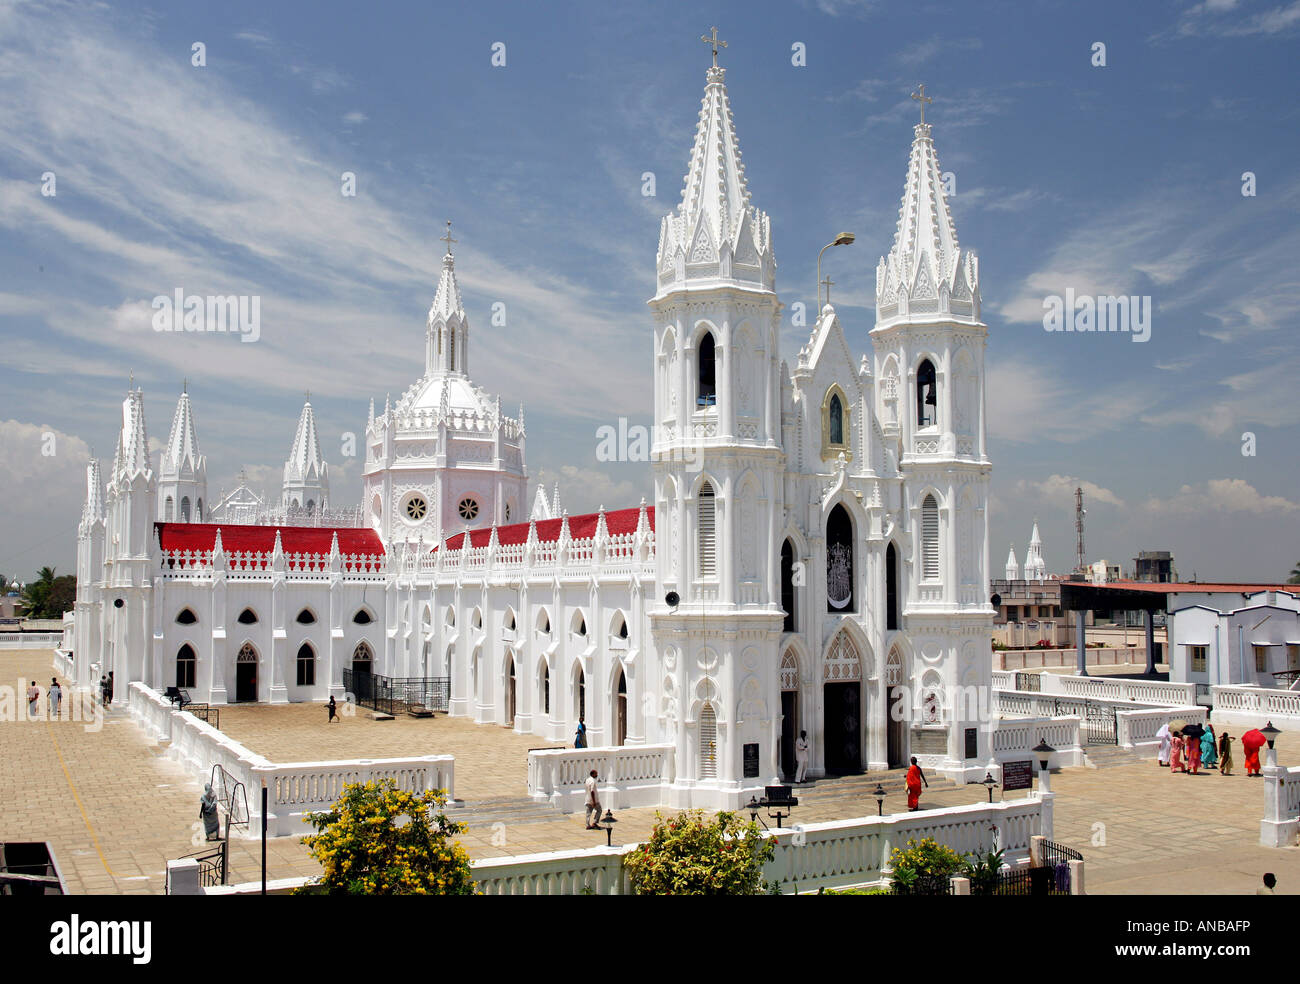 India, Vailankanni: the holy site of the Shrine Basilika Stock Photo